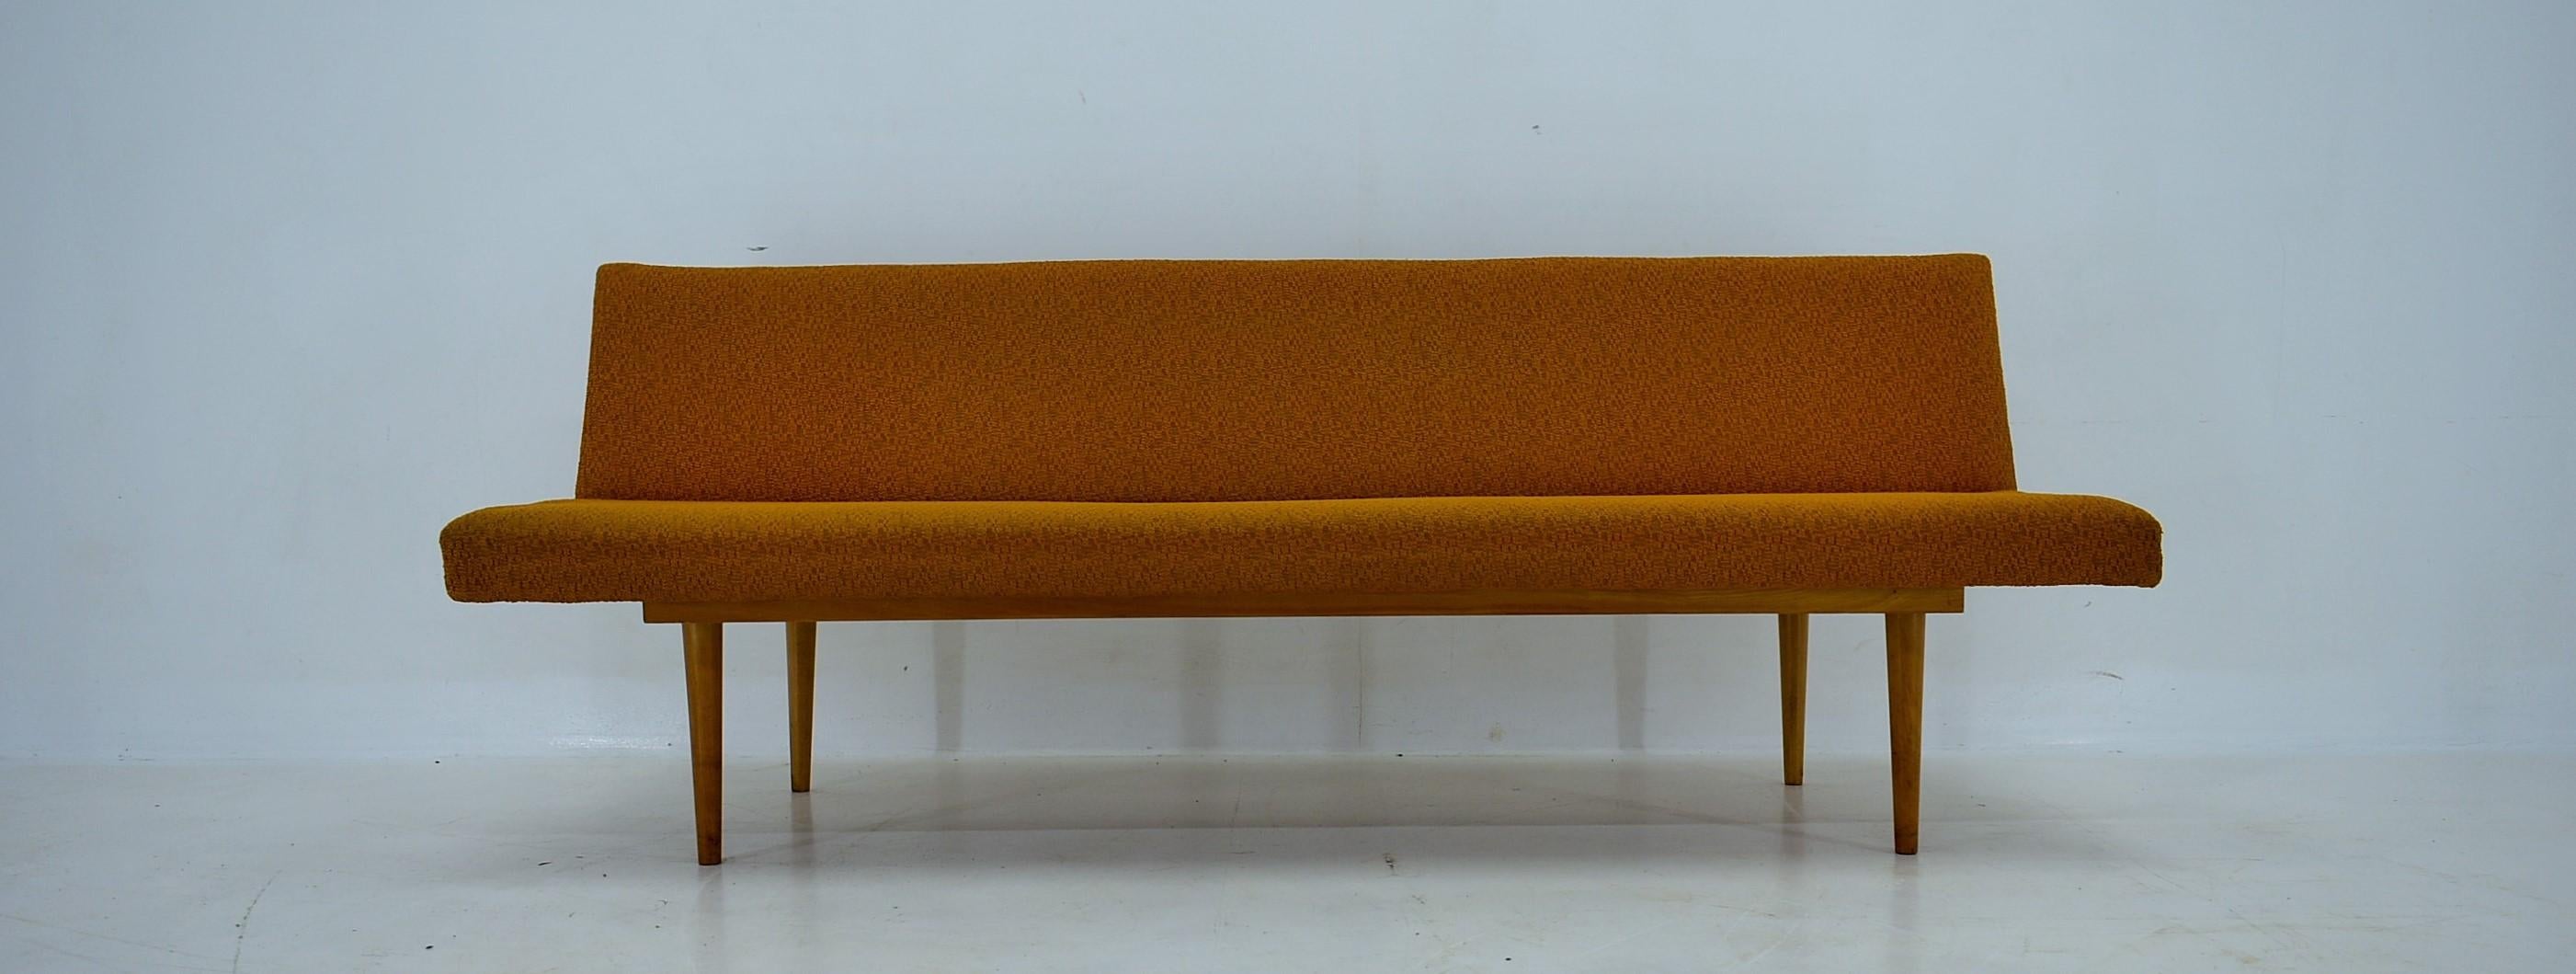 Midcentury Sofa / Daybed Designed by Miroslav Navratil, 1960s For Sale 9